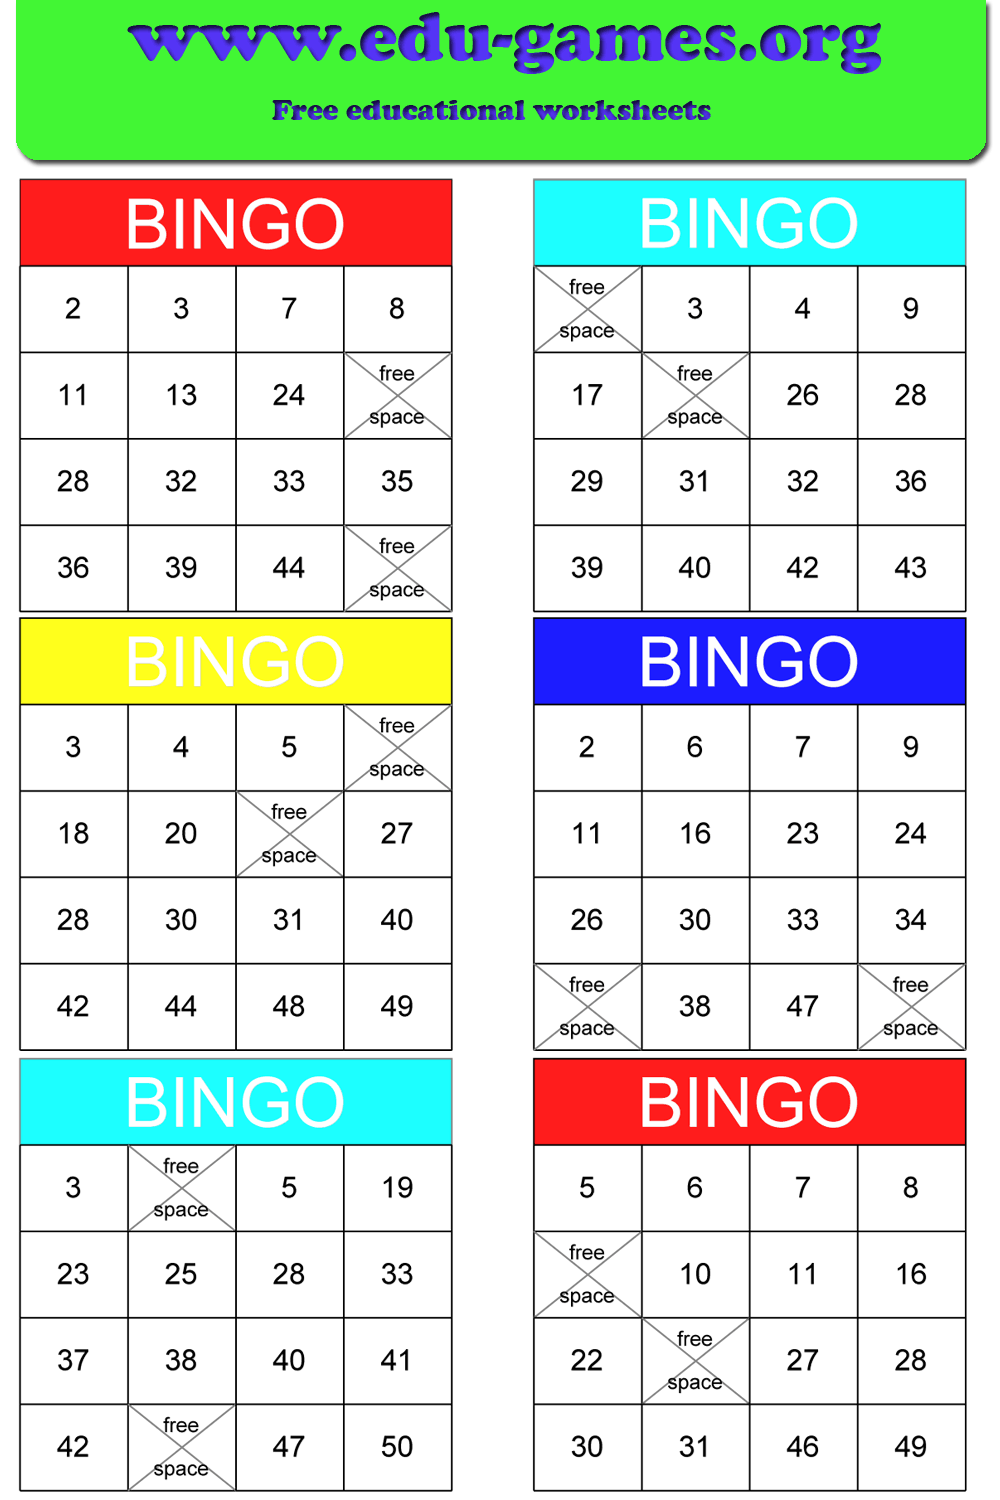 downloadable-bingo-games-englishblog